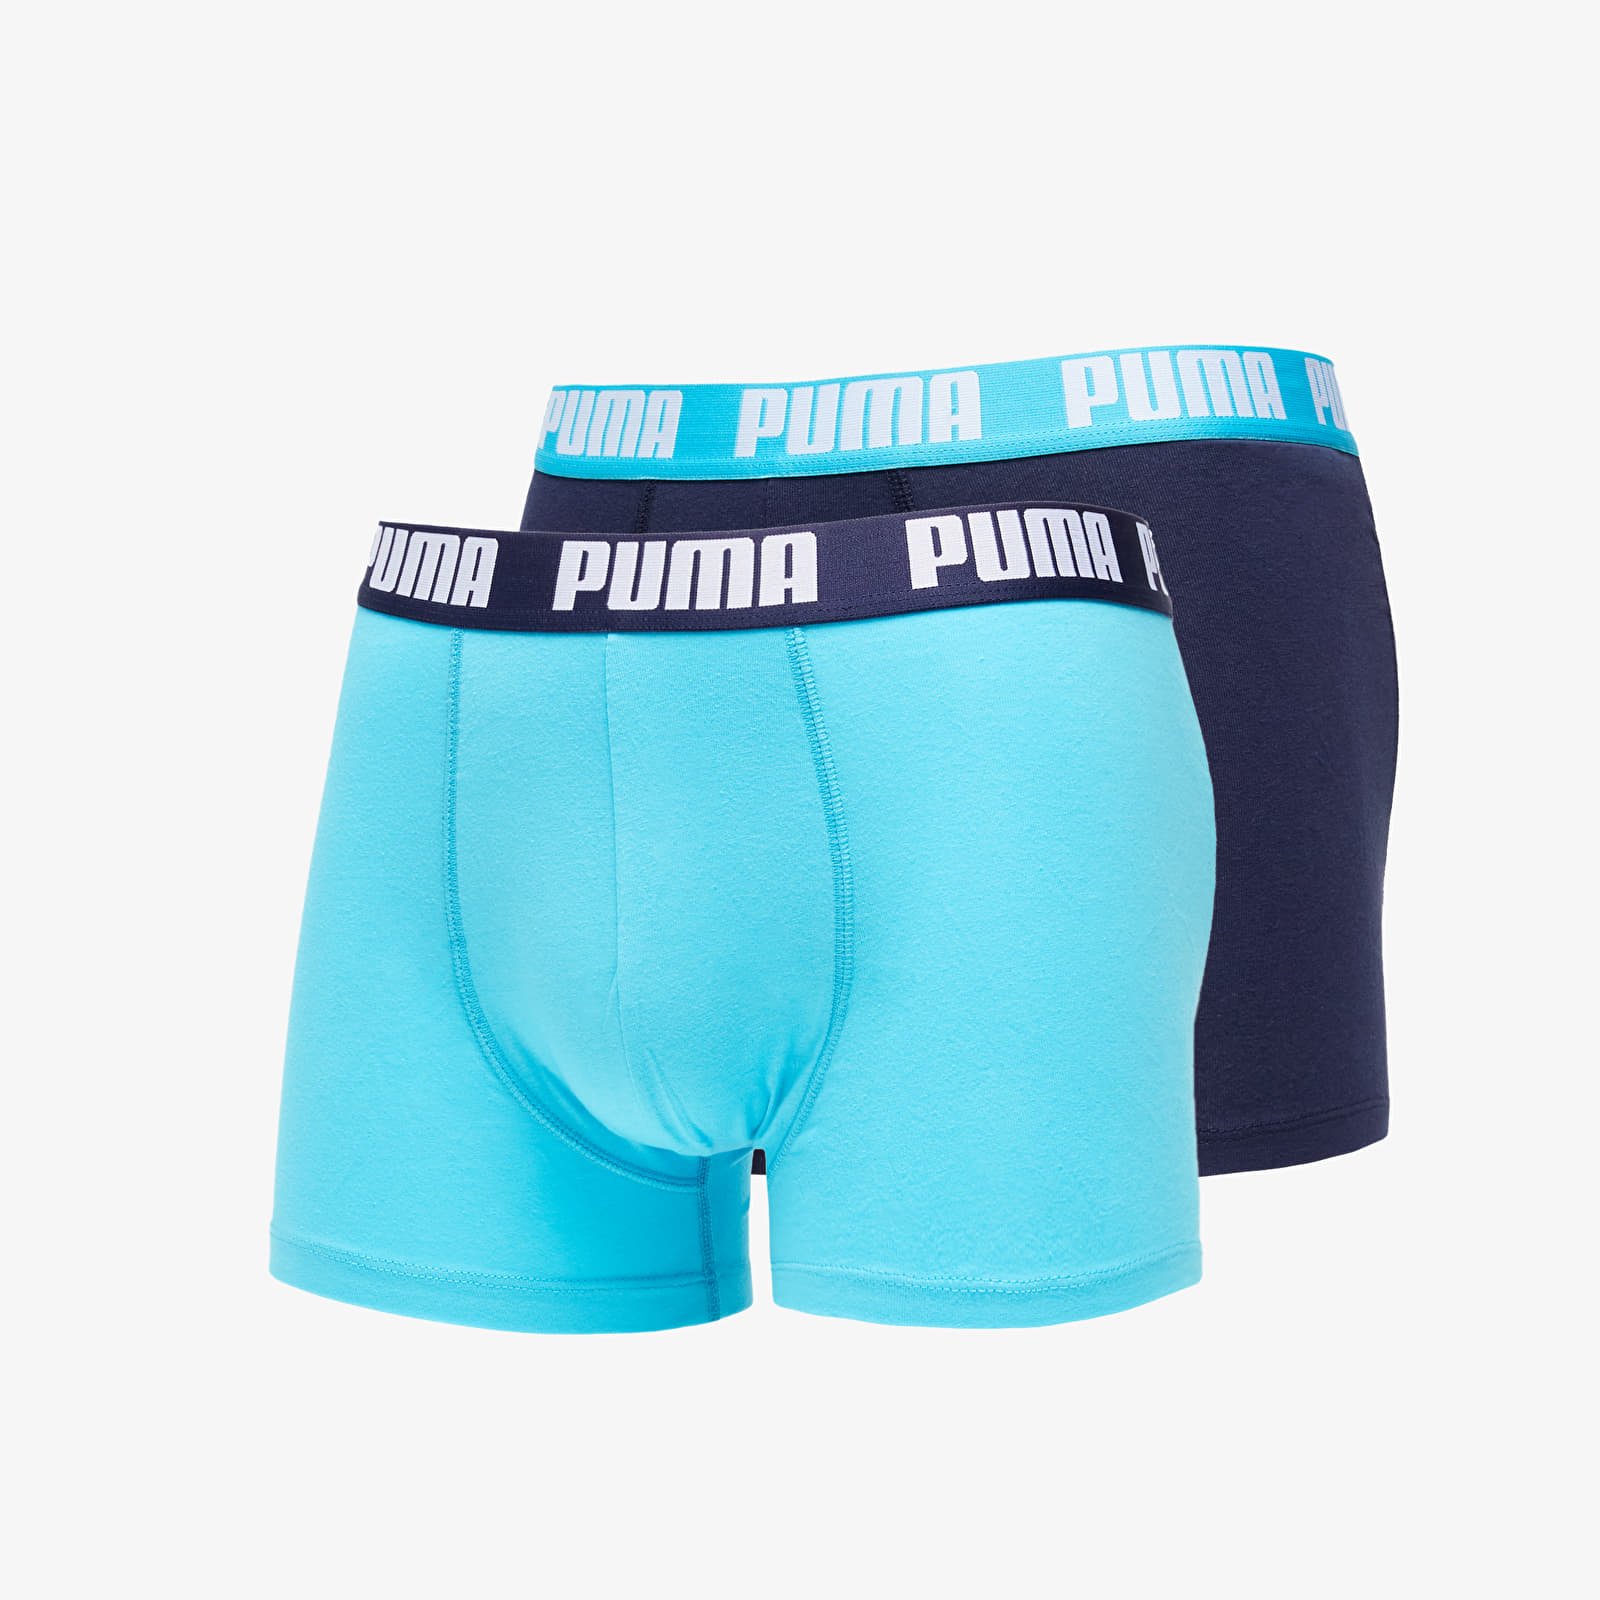 Boxer shorts Puma 2 Pack Basic Boxers Aqua Blue